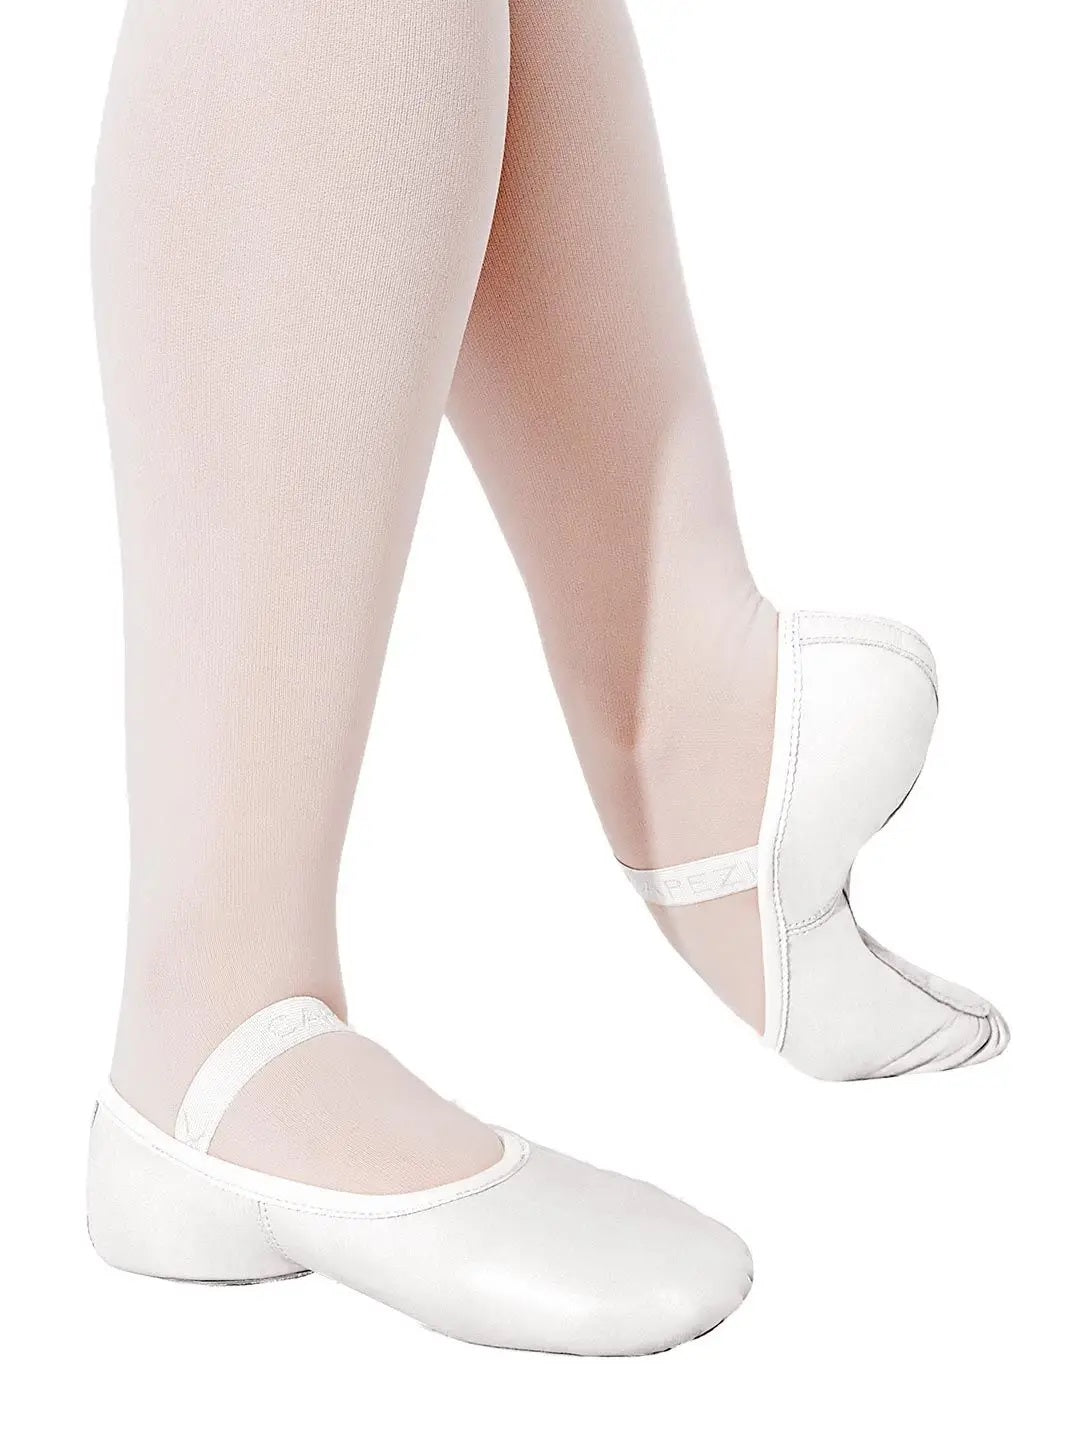 Lily Ballet Shoe - Child White